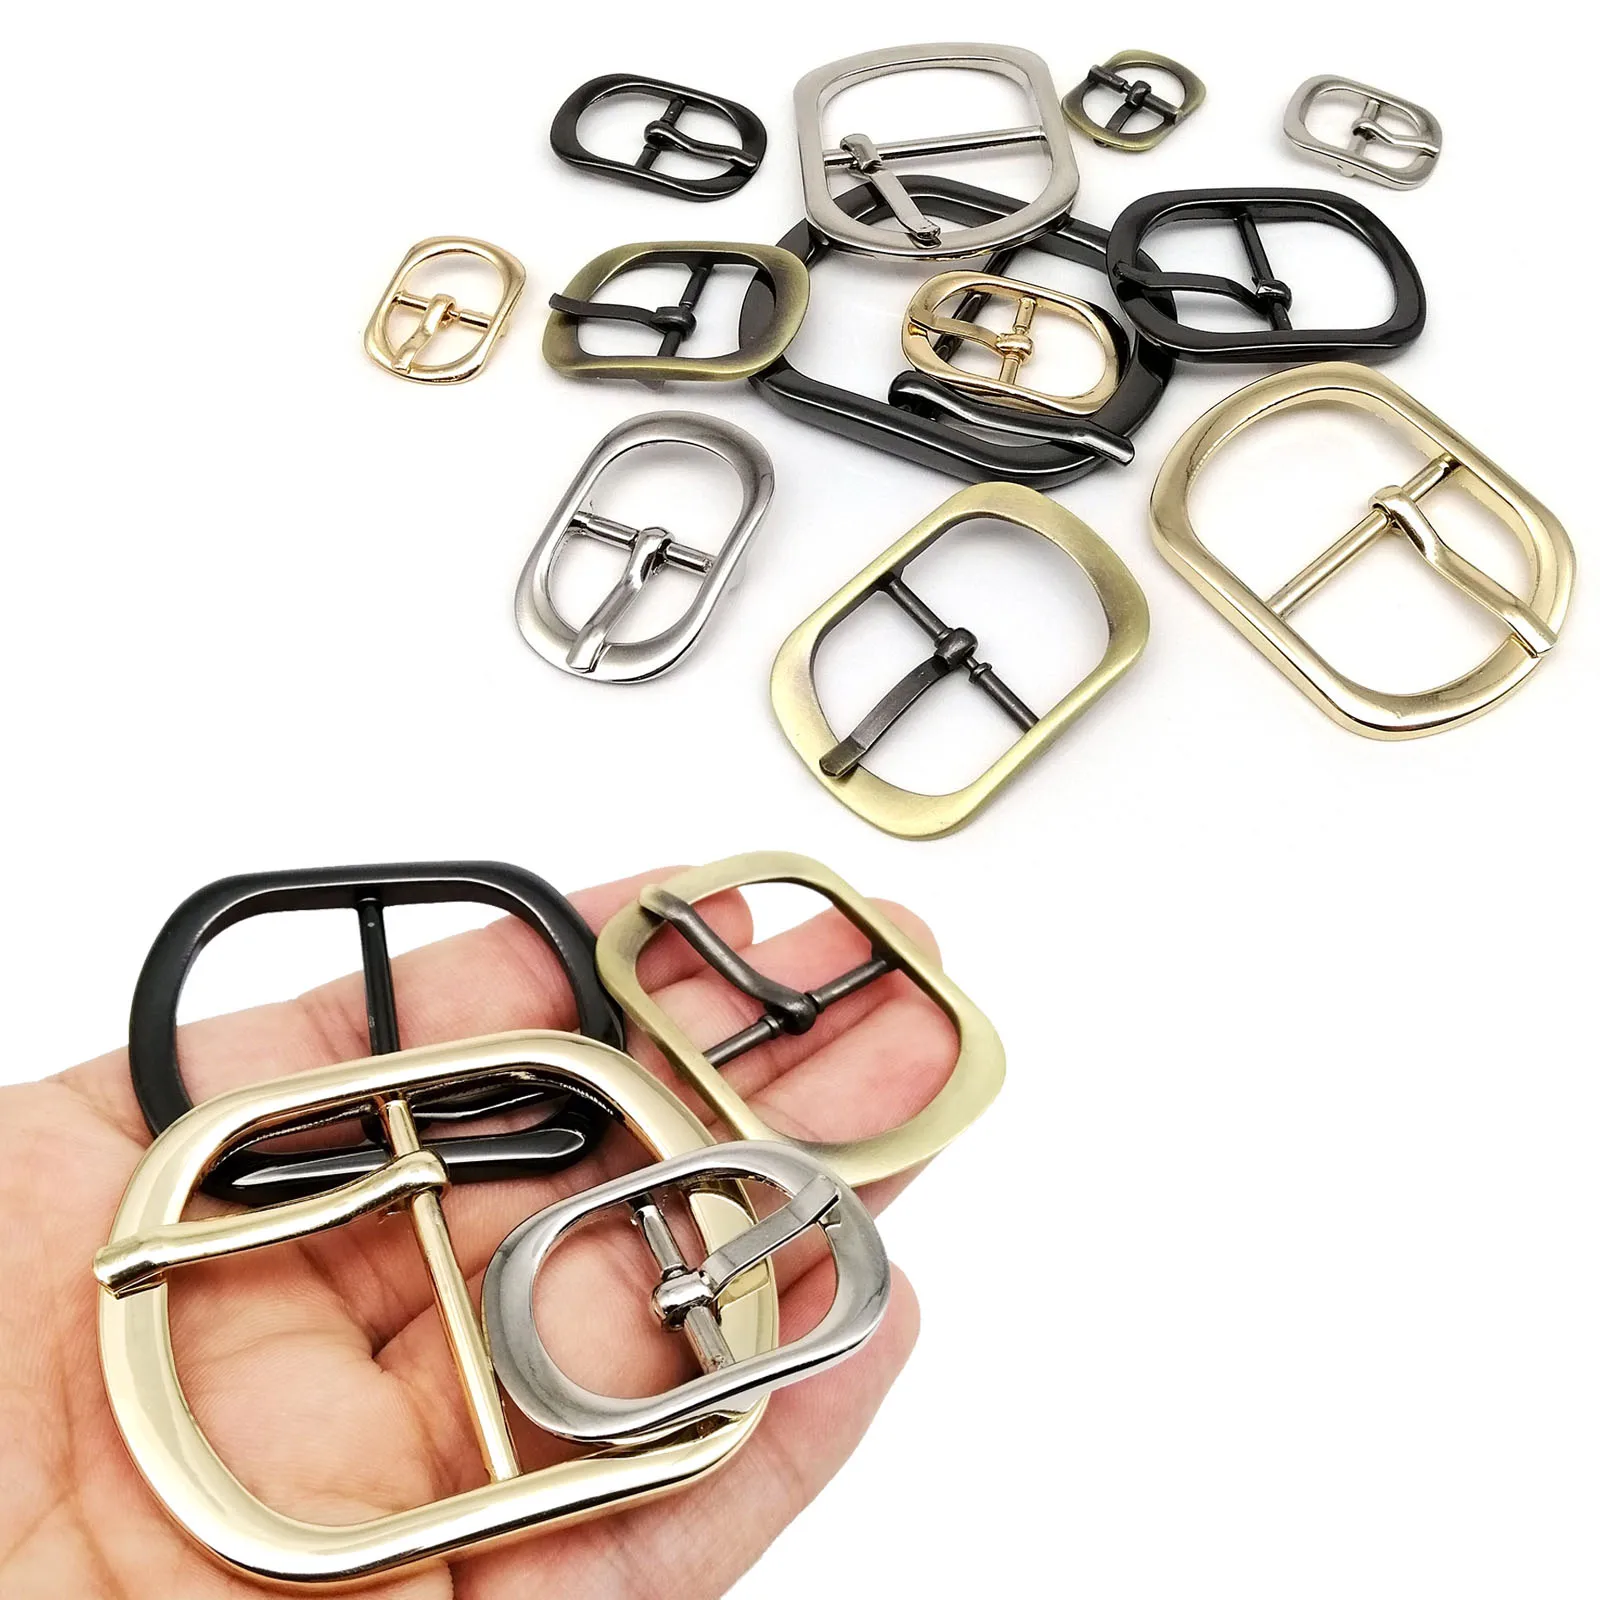 2pcs Metal Leather Hand Bag Purse Shoe Strap Shoulder Belt Adjust Roller Pin Buckle Snap Clips Rectangle Oval O Ring Repair DIY